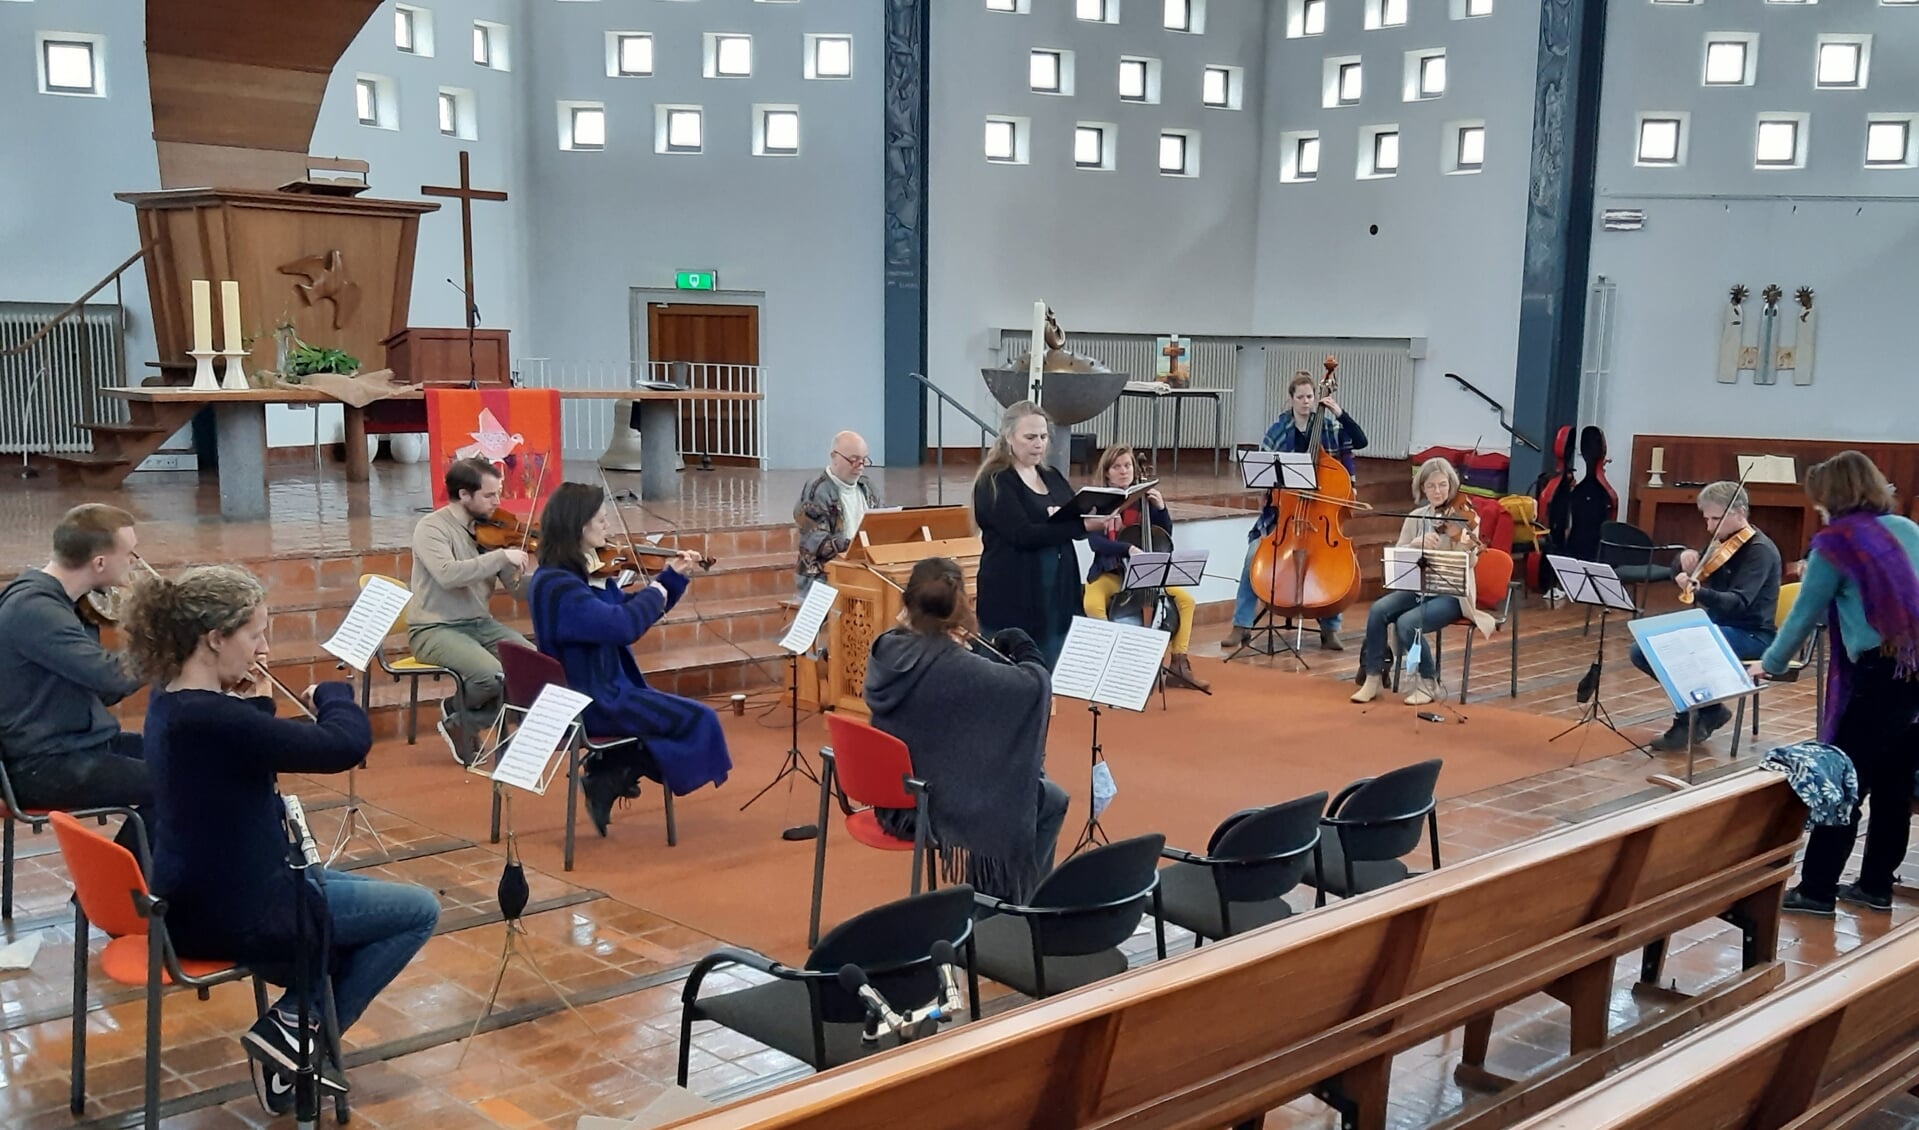 Repetitie van bach Ensemble Amsterdam in de Kruiskerk.